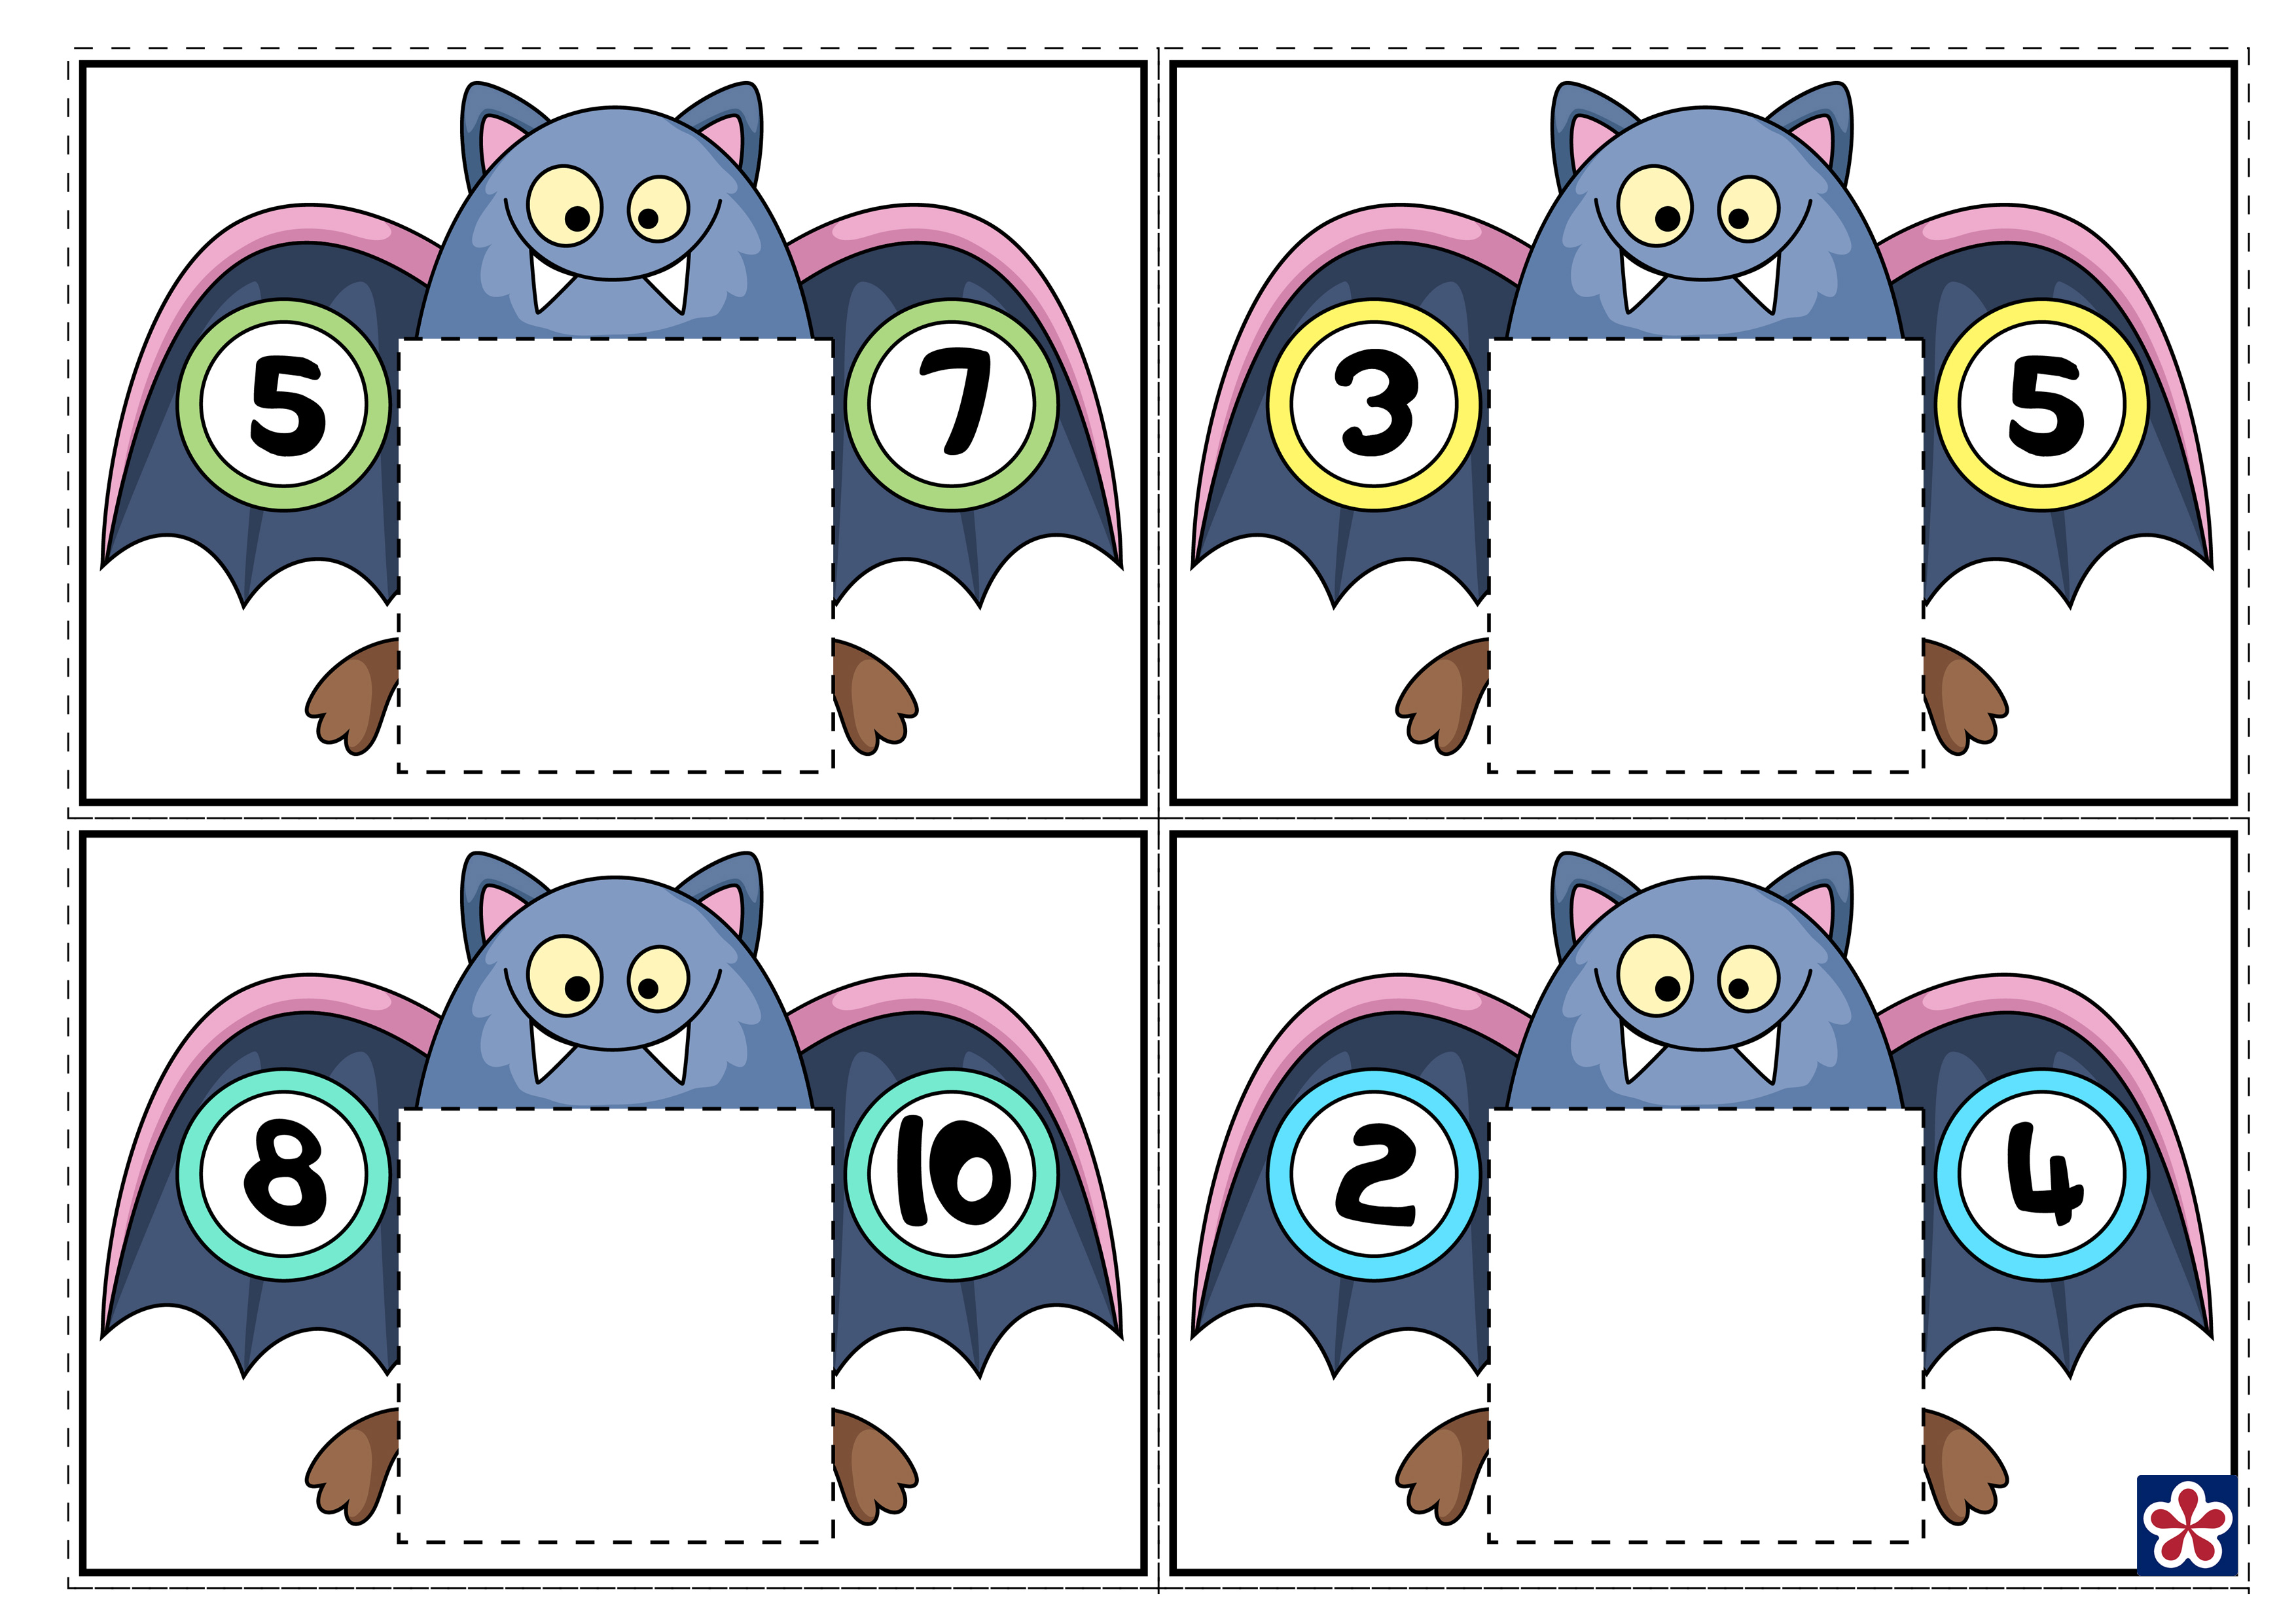 bat-themed-counting-worksheets-for-preschool-teachersmag